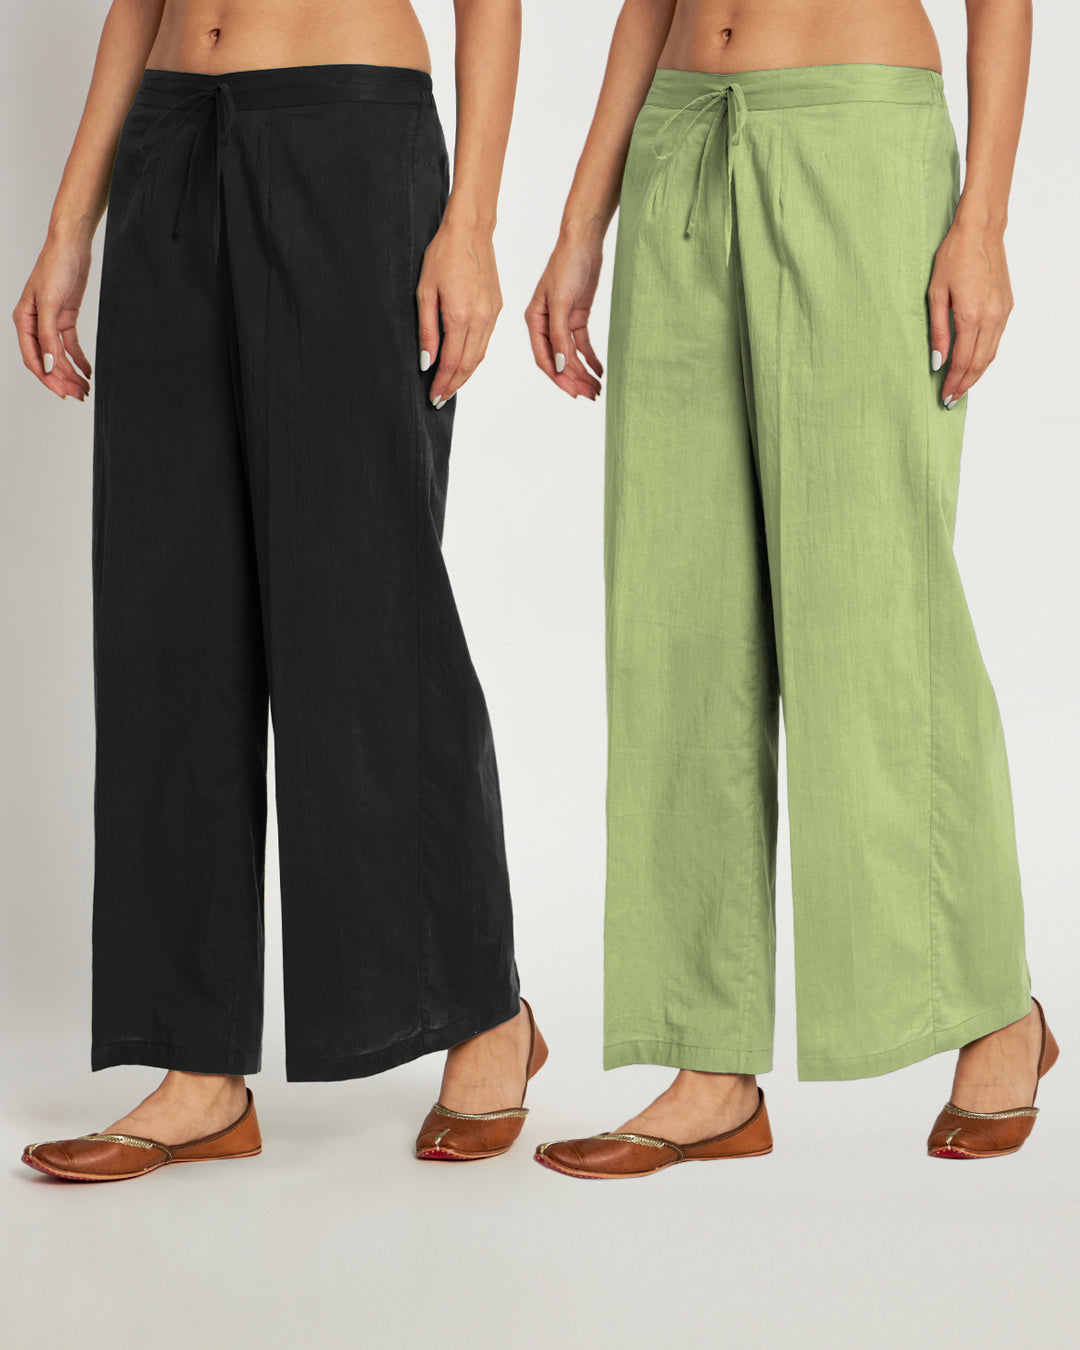 Combo: Black & Sage Green Wide Pants- Set Of 2